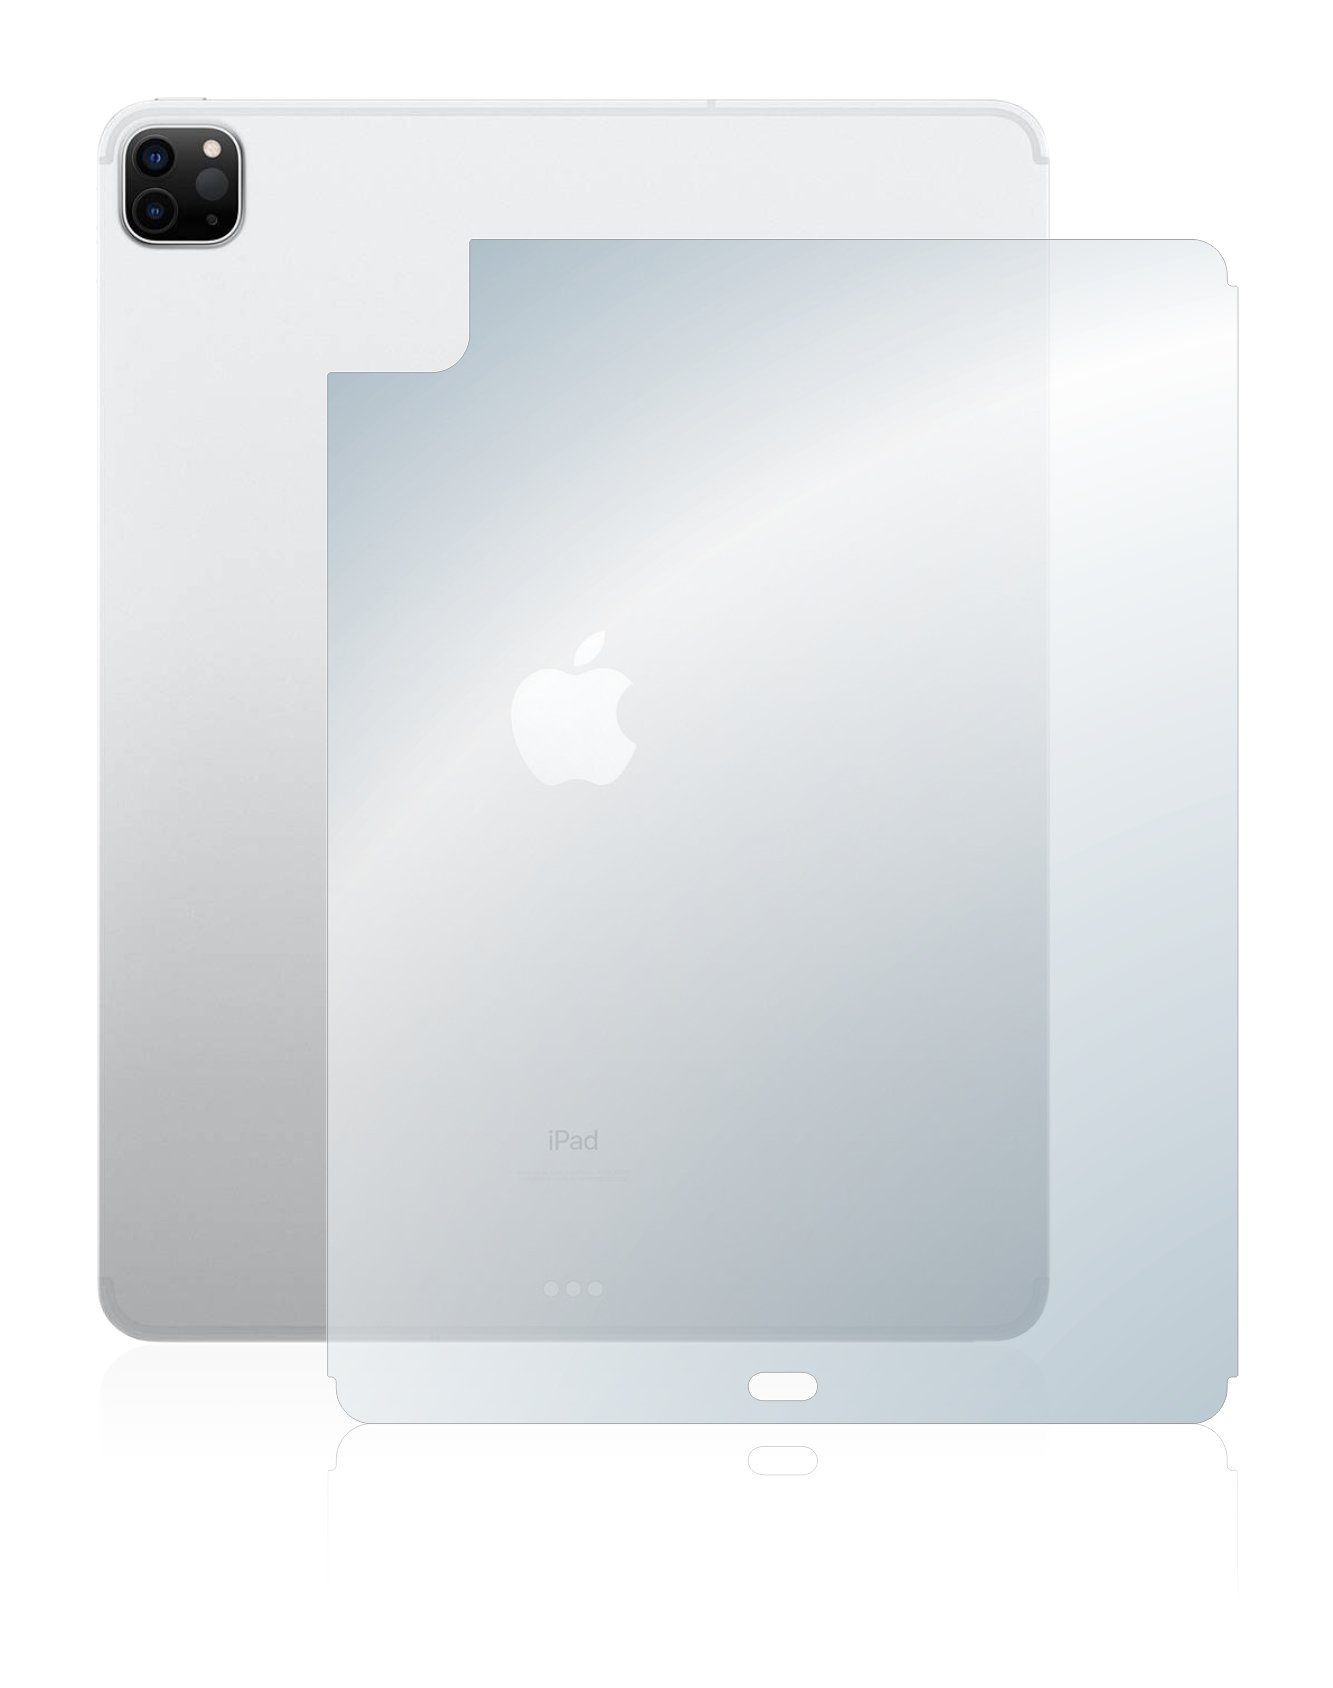 Matt Folie für iPad Pro 12,9-Zoll Anti Reflex PaperFeel Schutzfolie Displayschutz wie Papier Kompatibel für New iPad Pro 12,9 2018 BENKS Schutzfolie für iPad Pro 12.9 Zoll 2018 Displayschutzfolien 